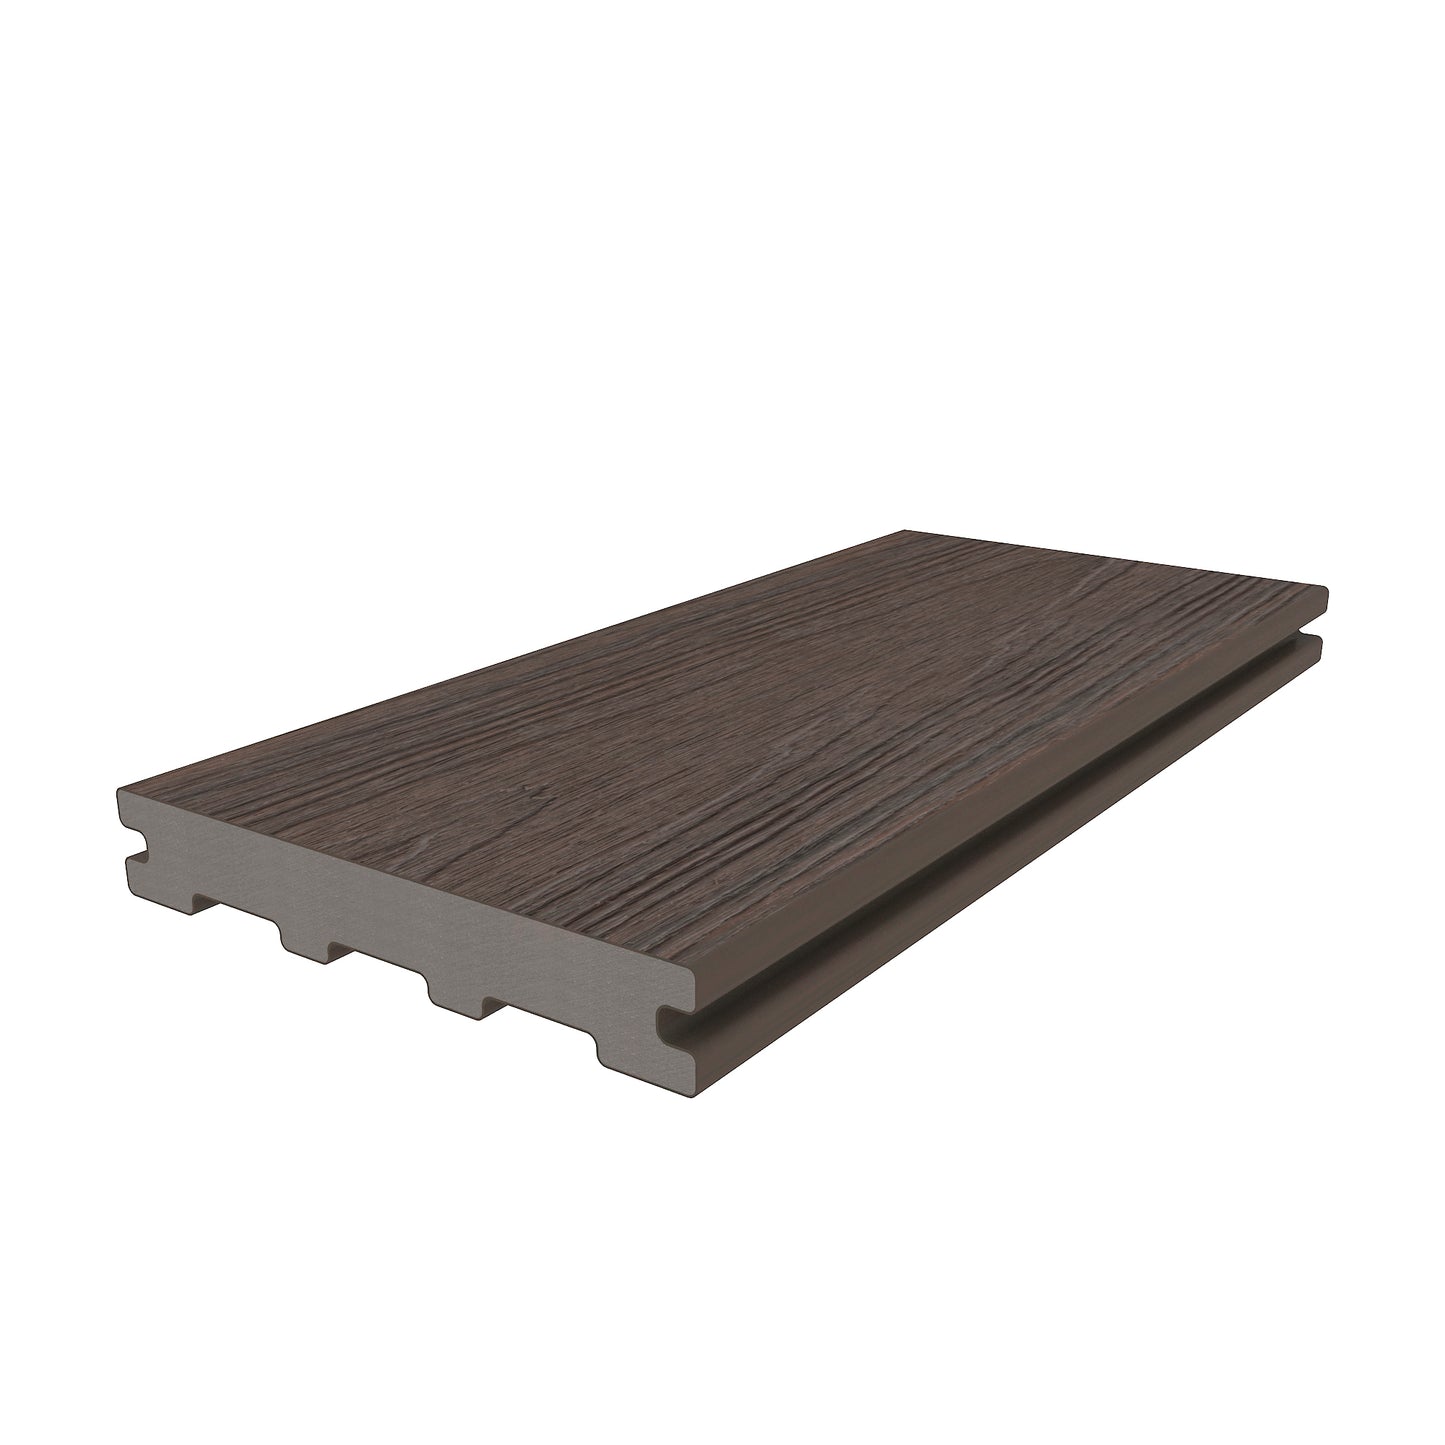 Ultrashield Naturale Semi Solid Composite Decking Board Walnut 